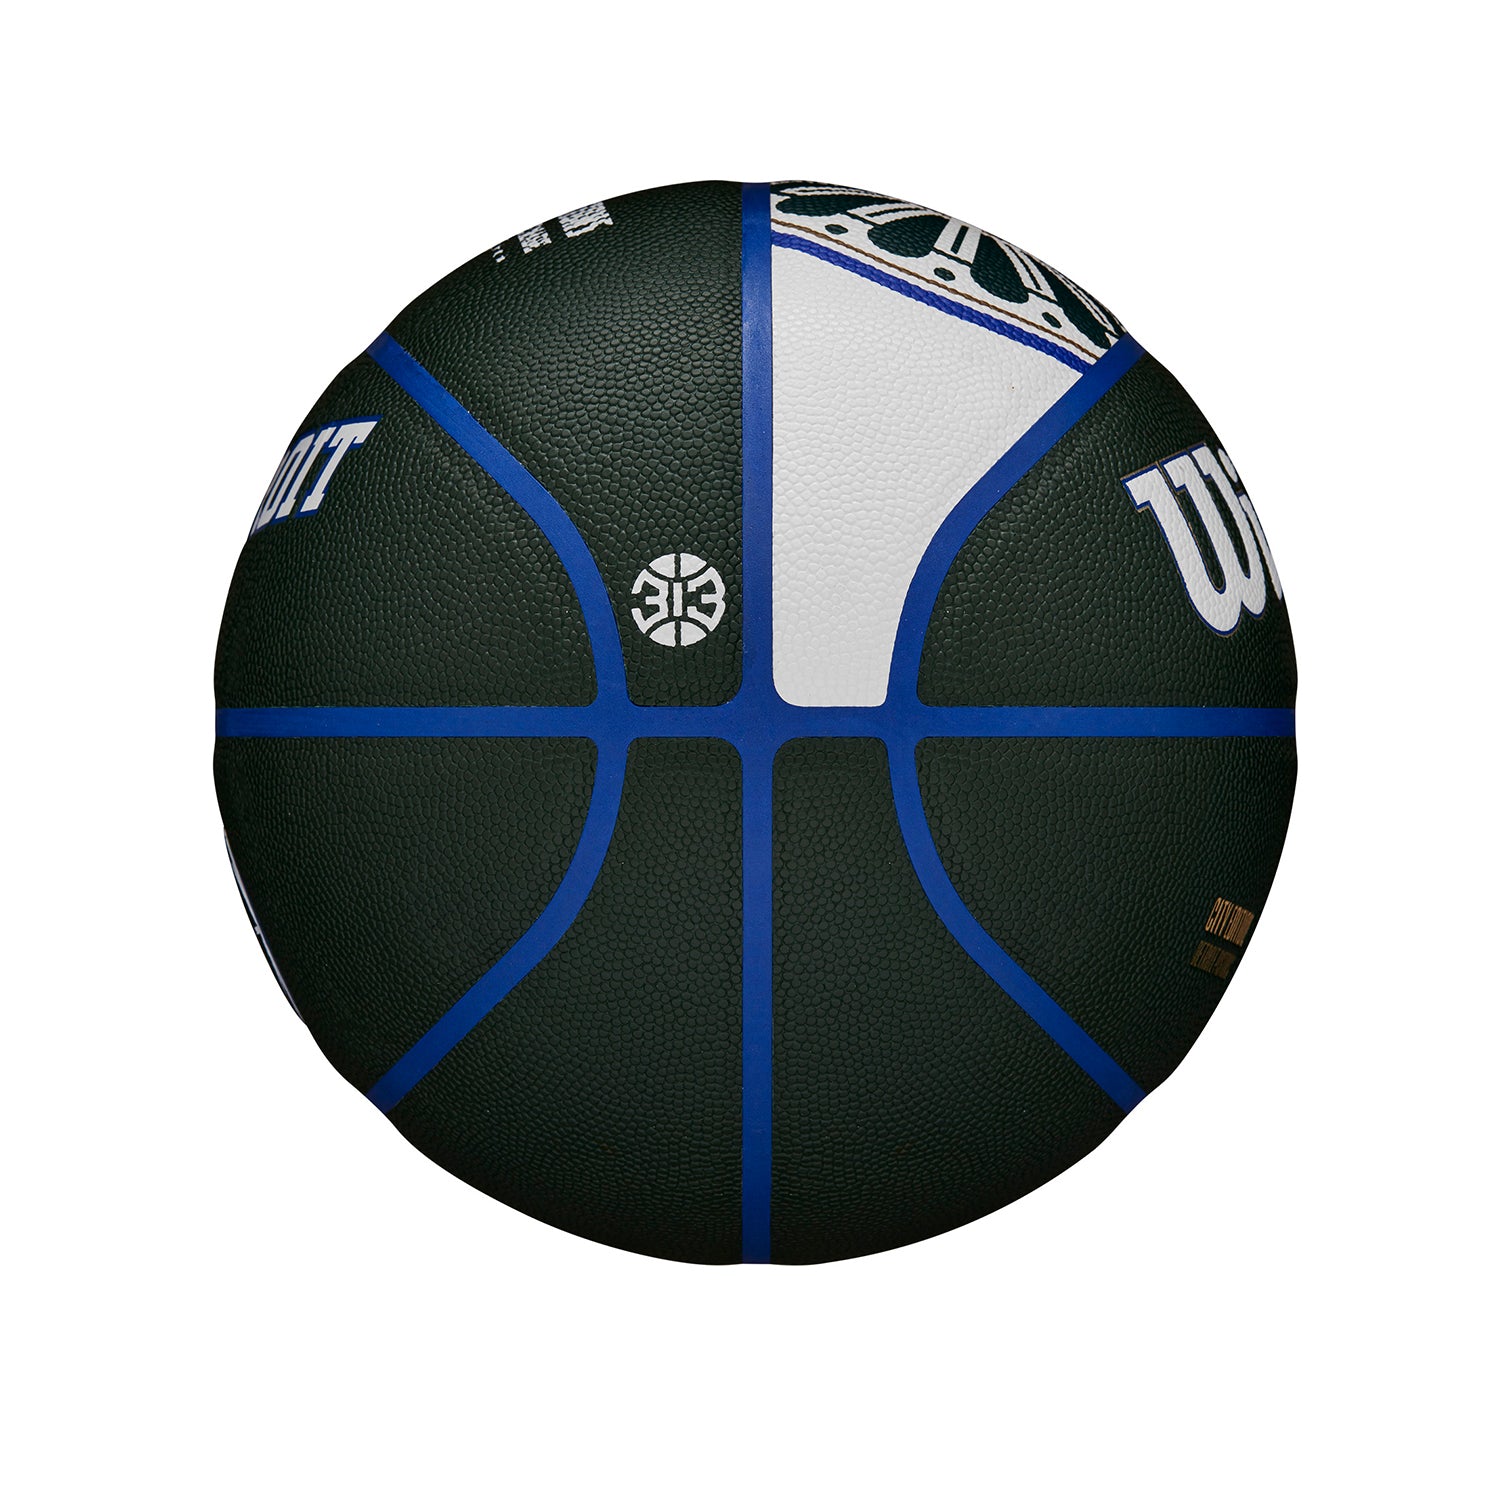 Pistons City Edition Jersey 2022-23: Detroit Returns to Roundball